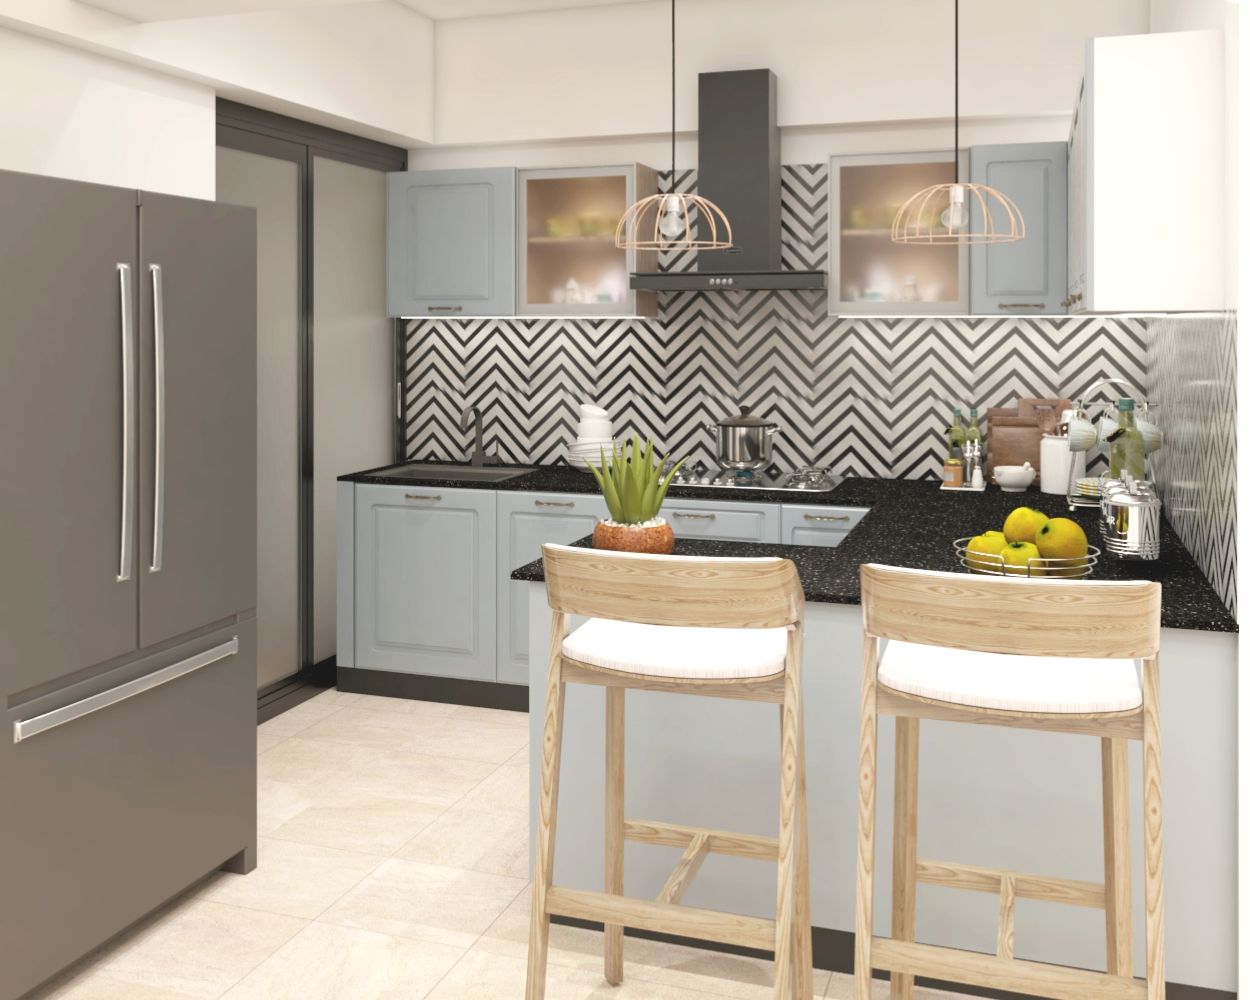 Modular Modern Open Kitchen Design With Blue Kitchen Cabinets And White-Black Backsplash